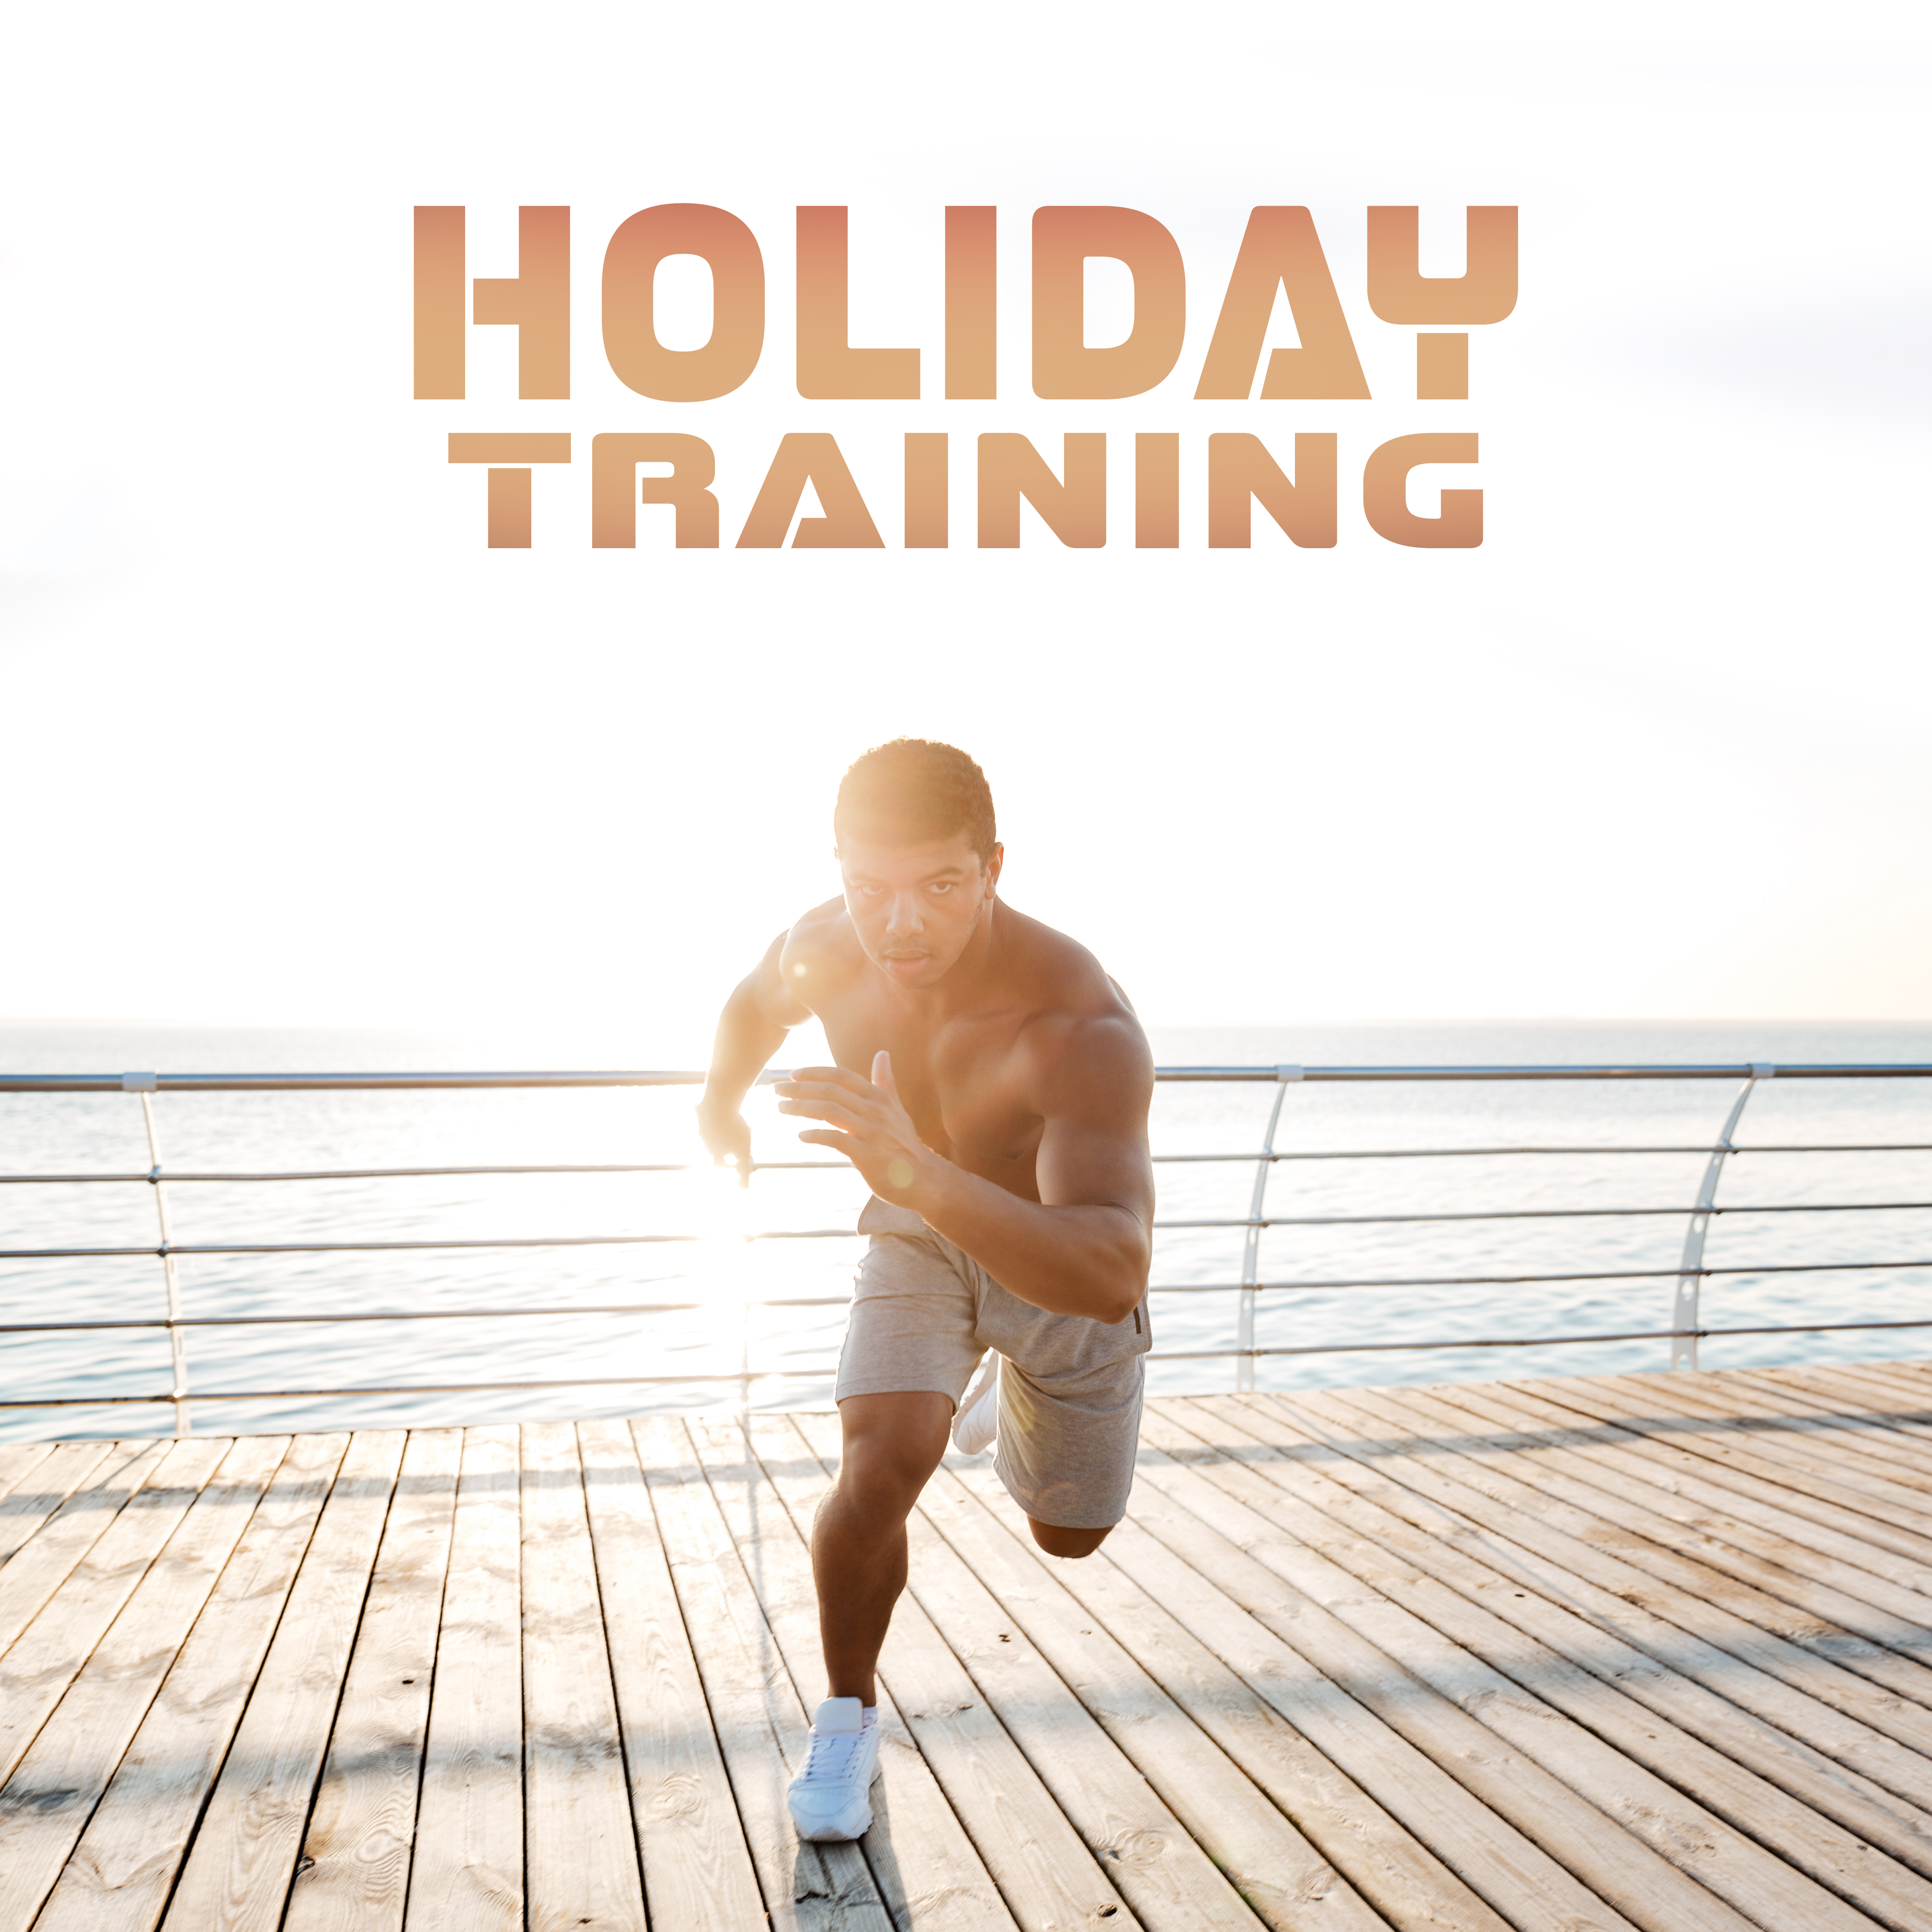 Holiday Training